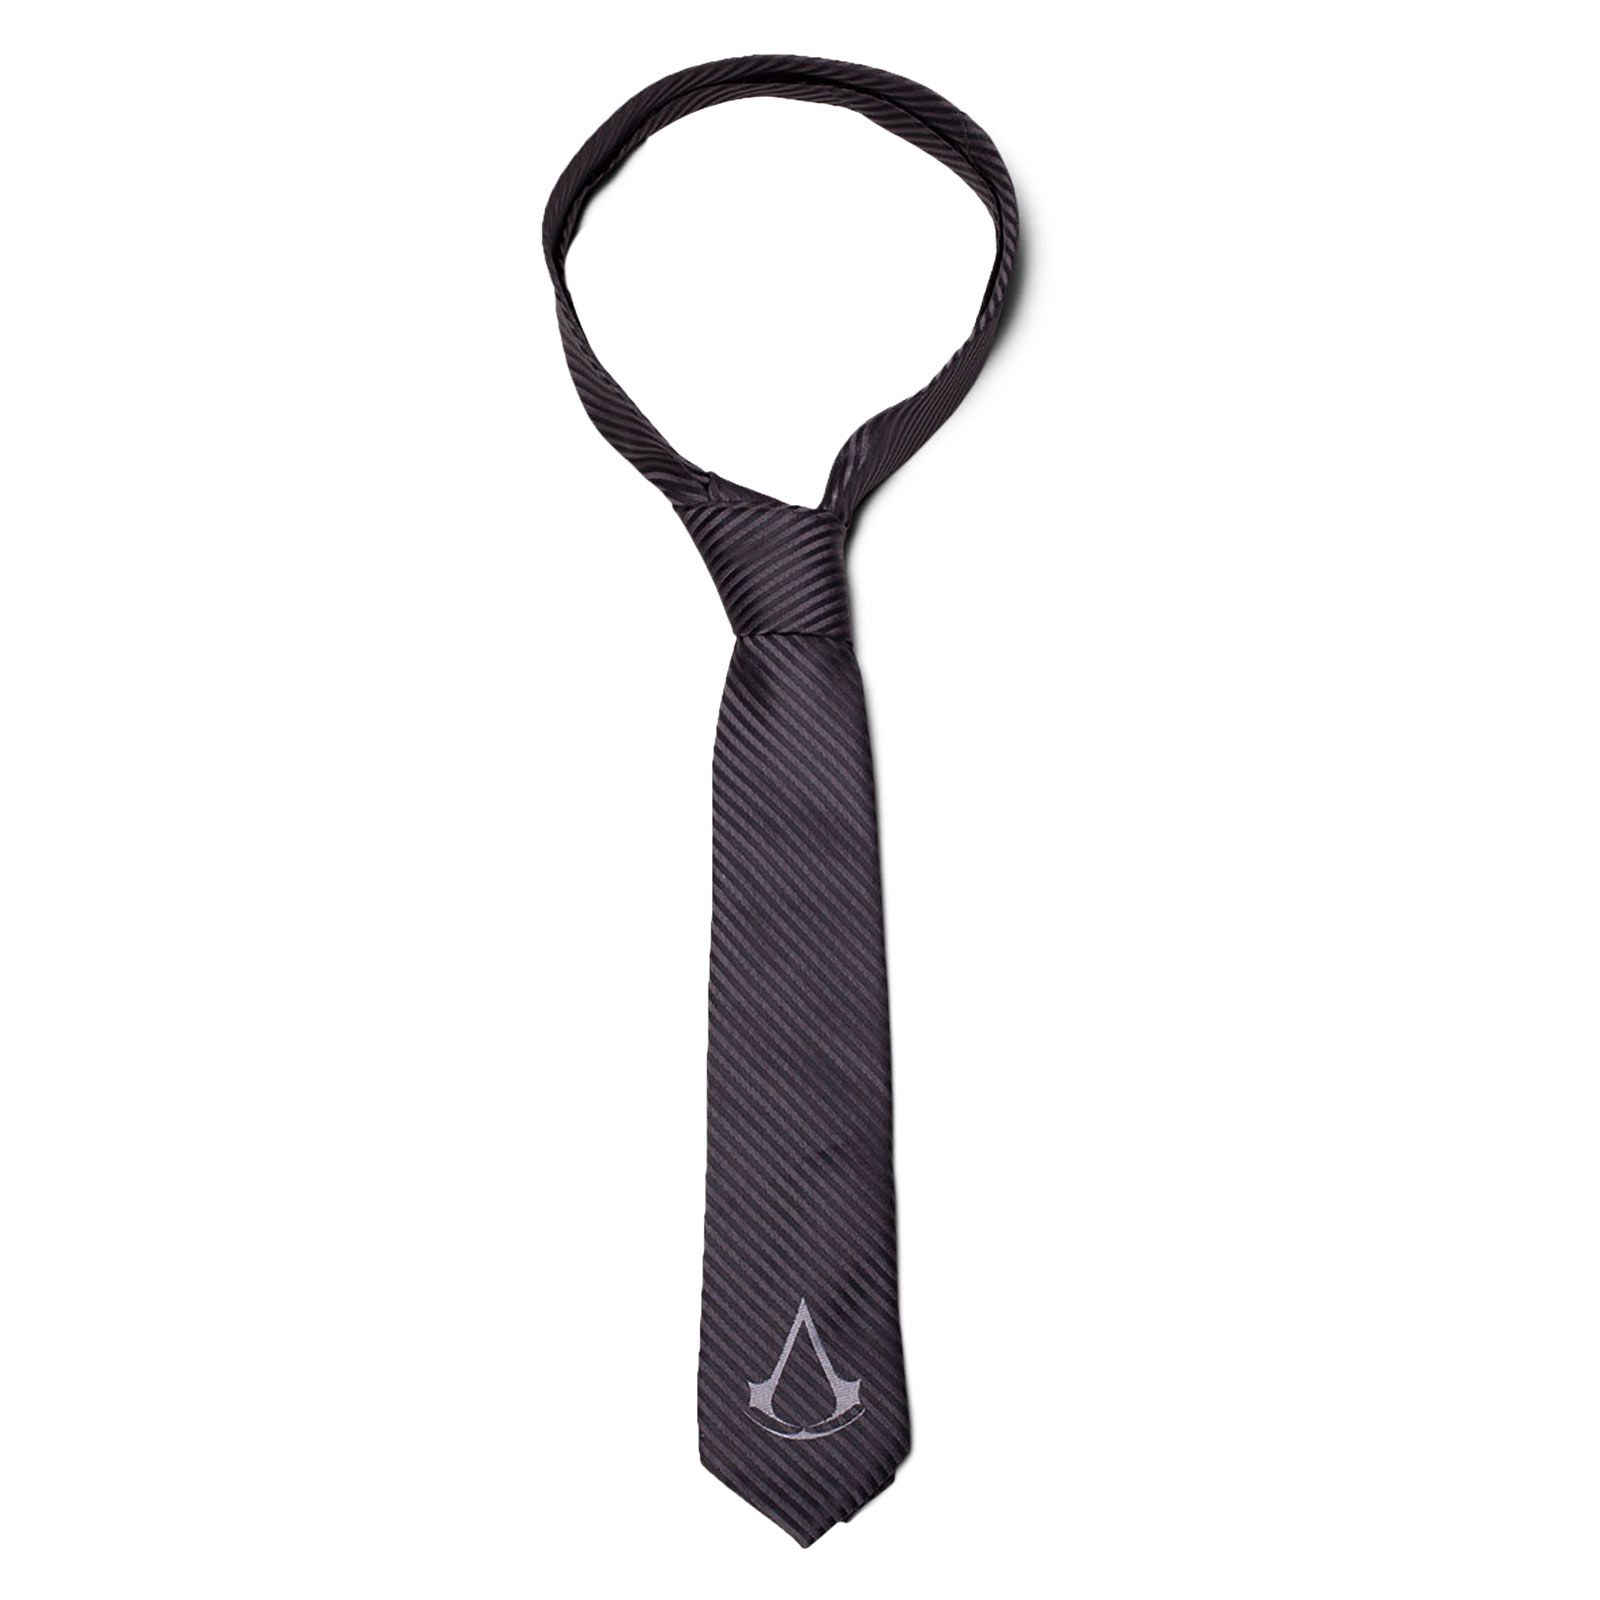 Assassins Creed - Logo Krawatte